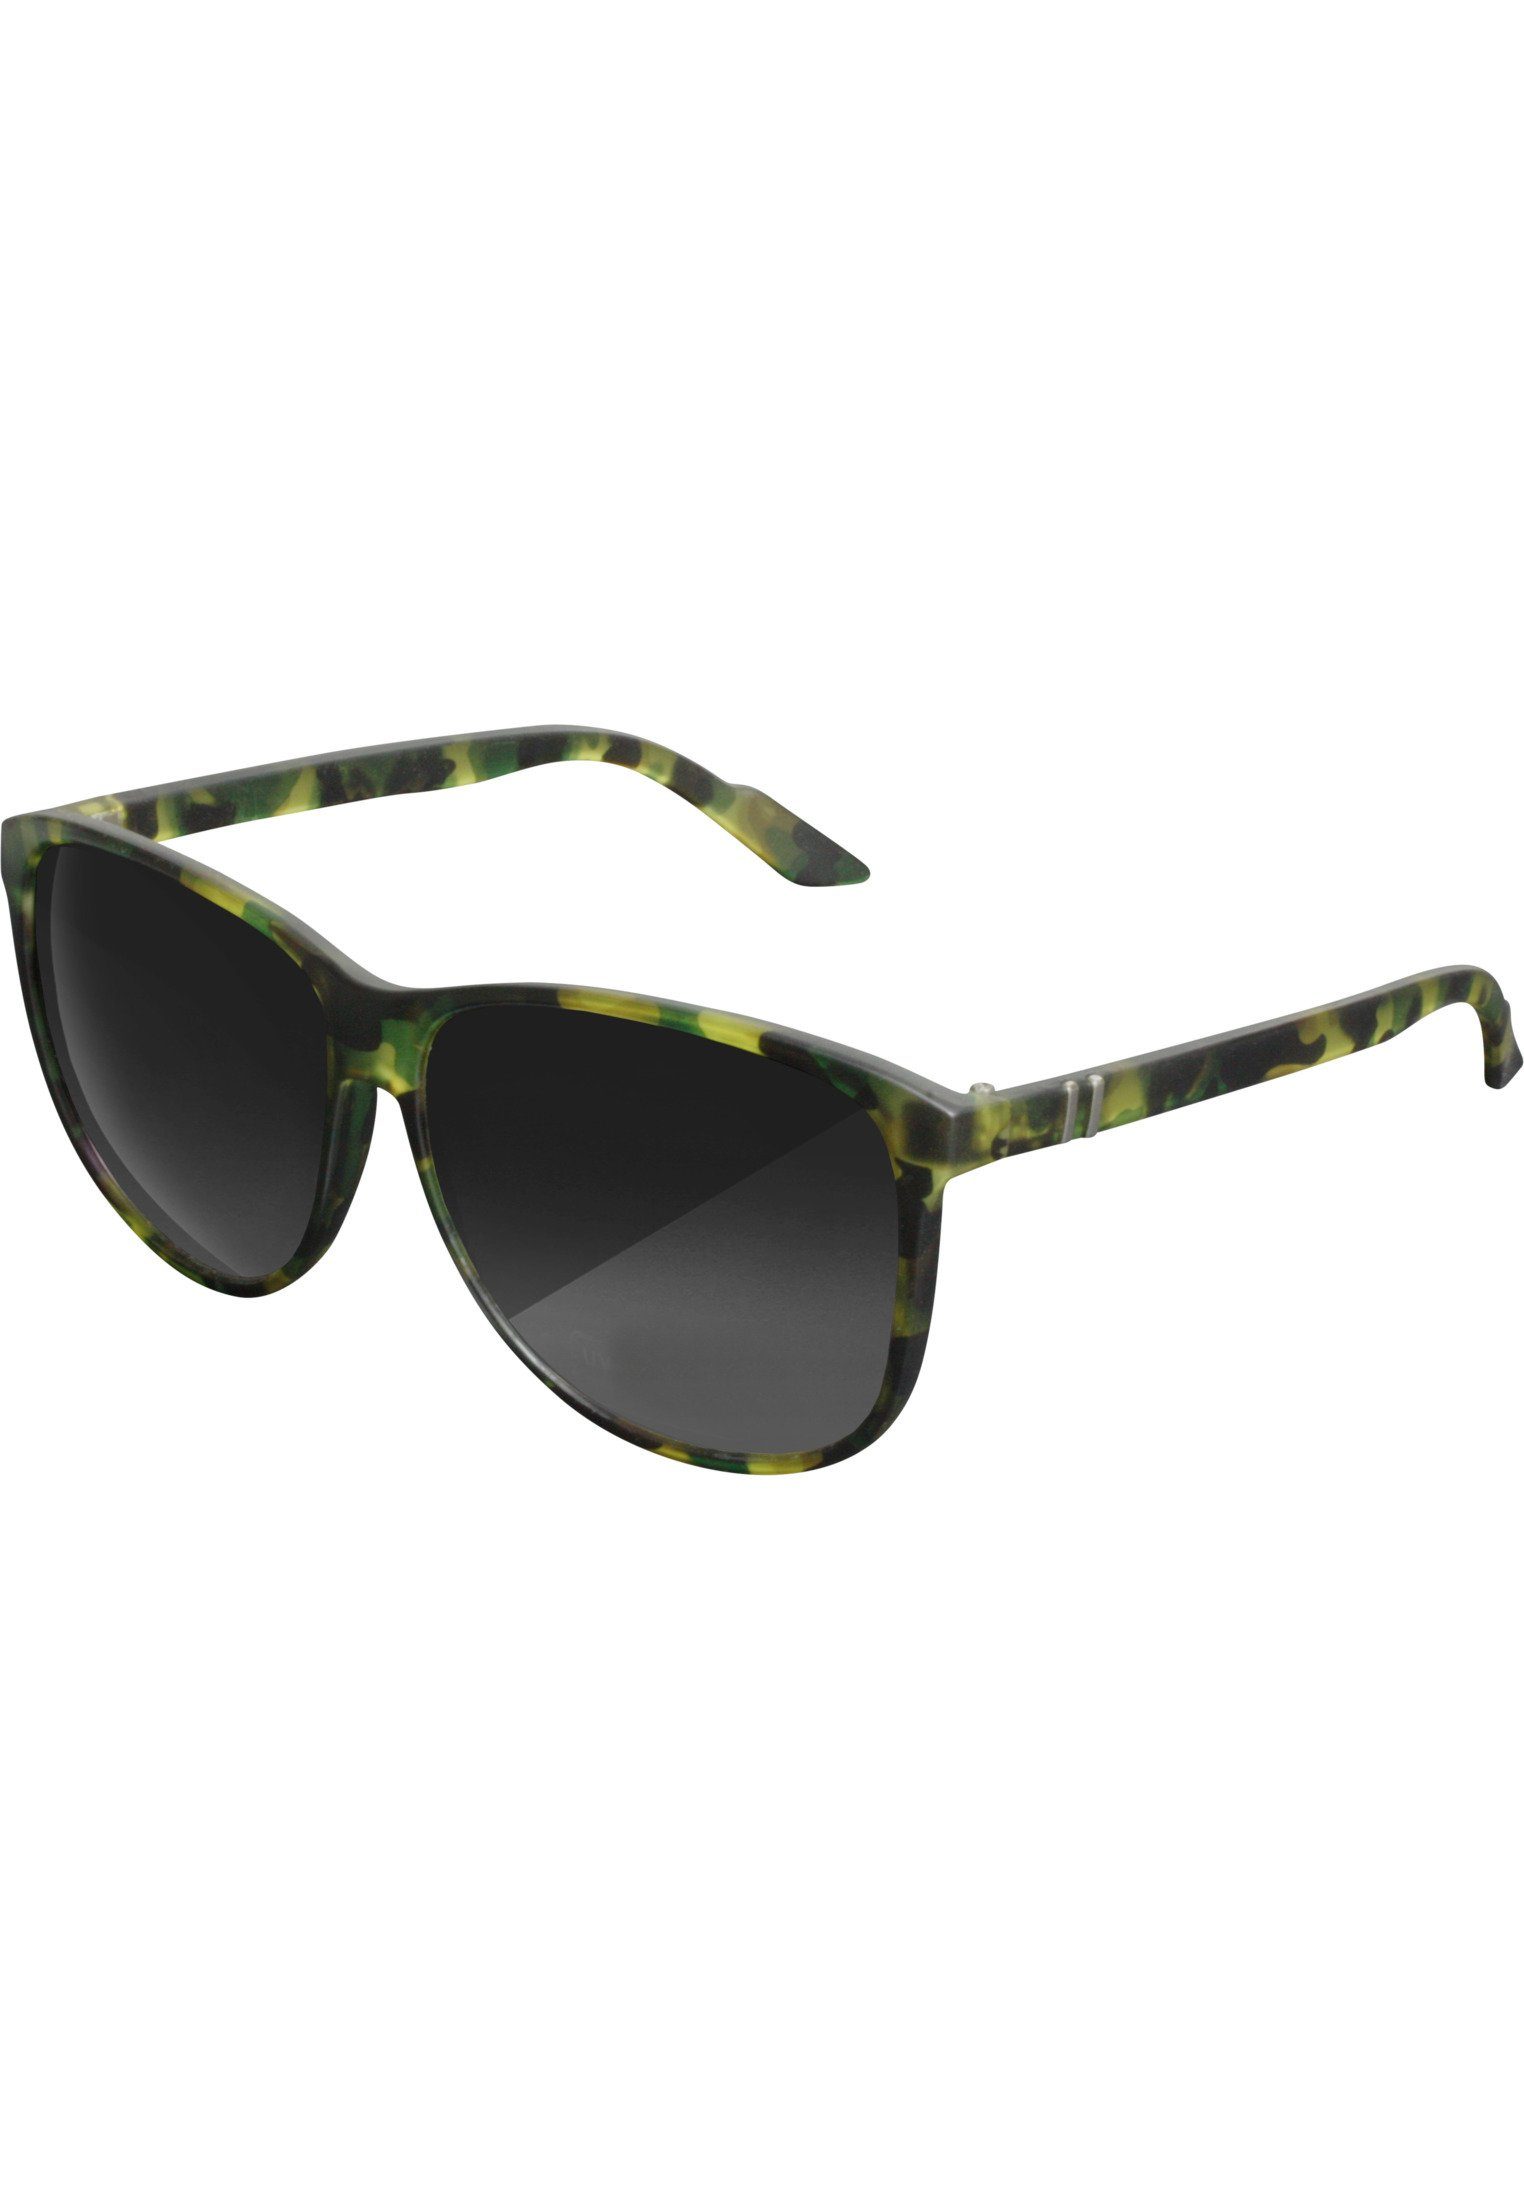 MSTRDS Sonnenbrille Sunglasses camo Accessoires Chirwa